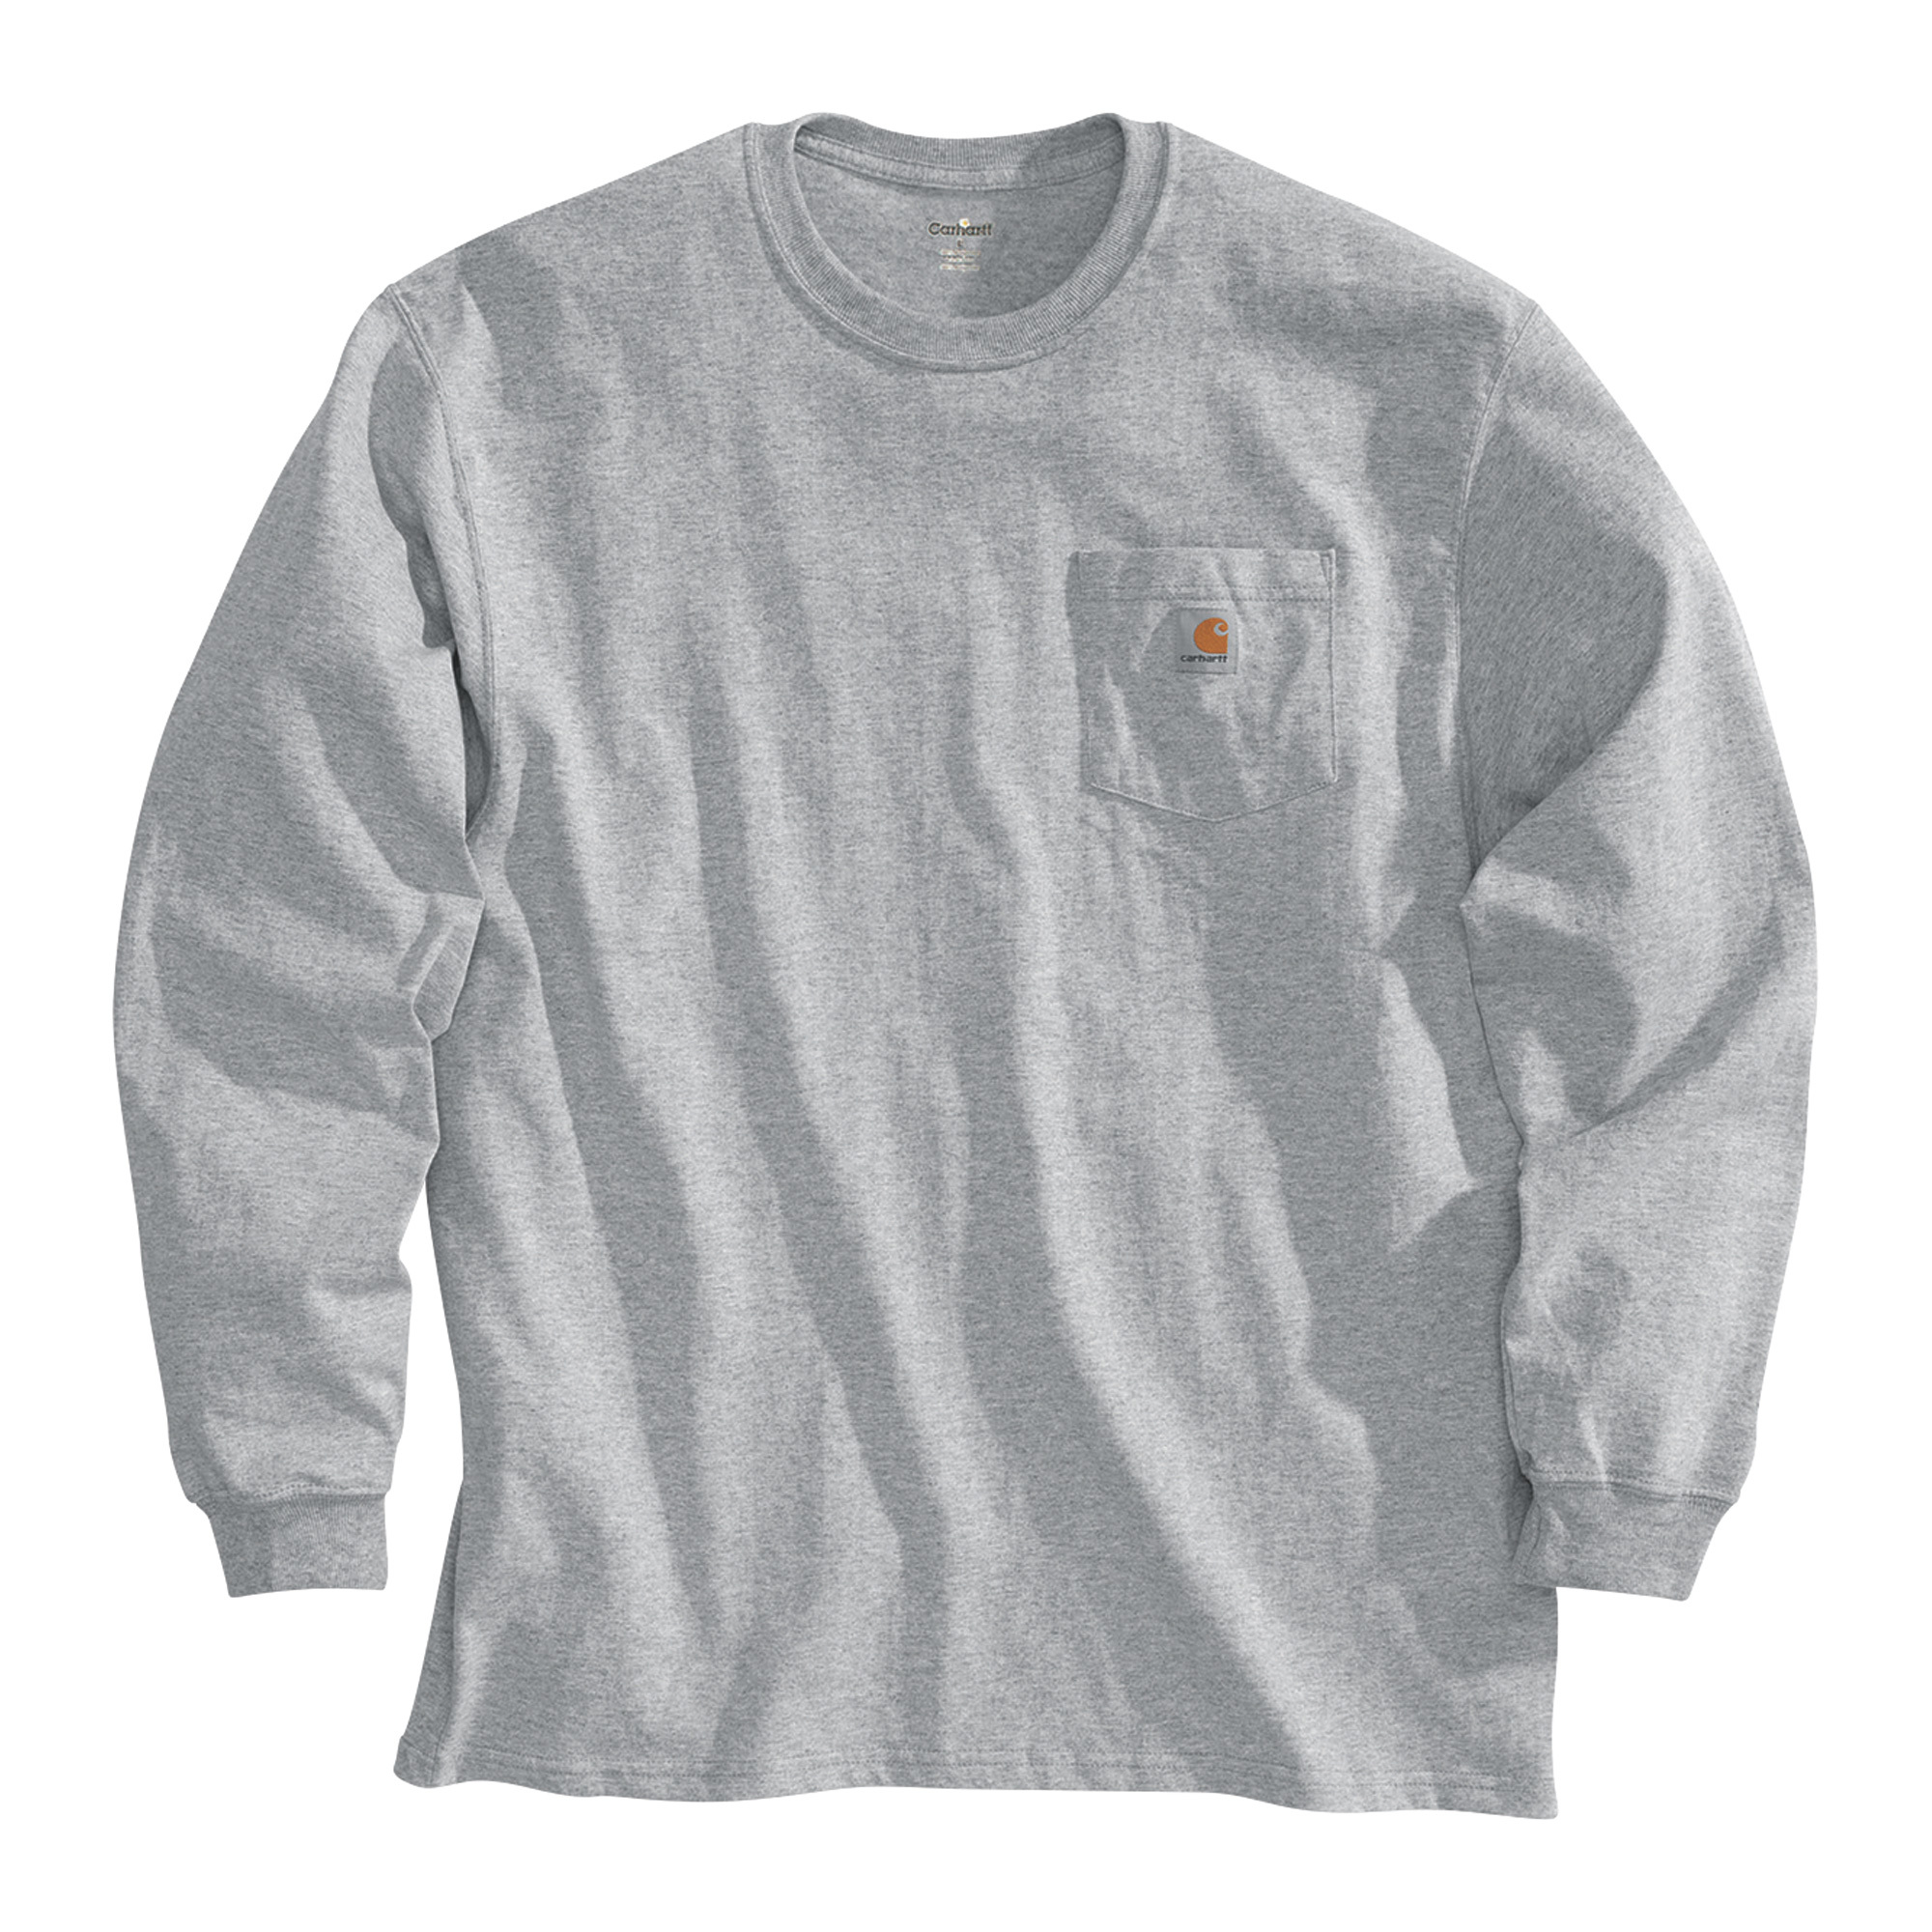 Carhartt Men's Workwear Long Sleeve Pocket T-Shirt - Heather Gray, Large, Regular Style, Model K126